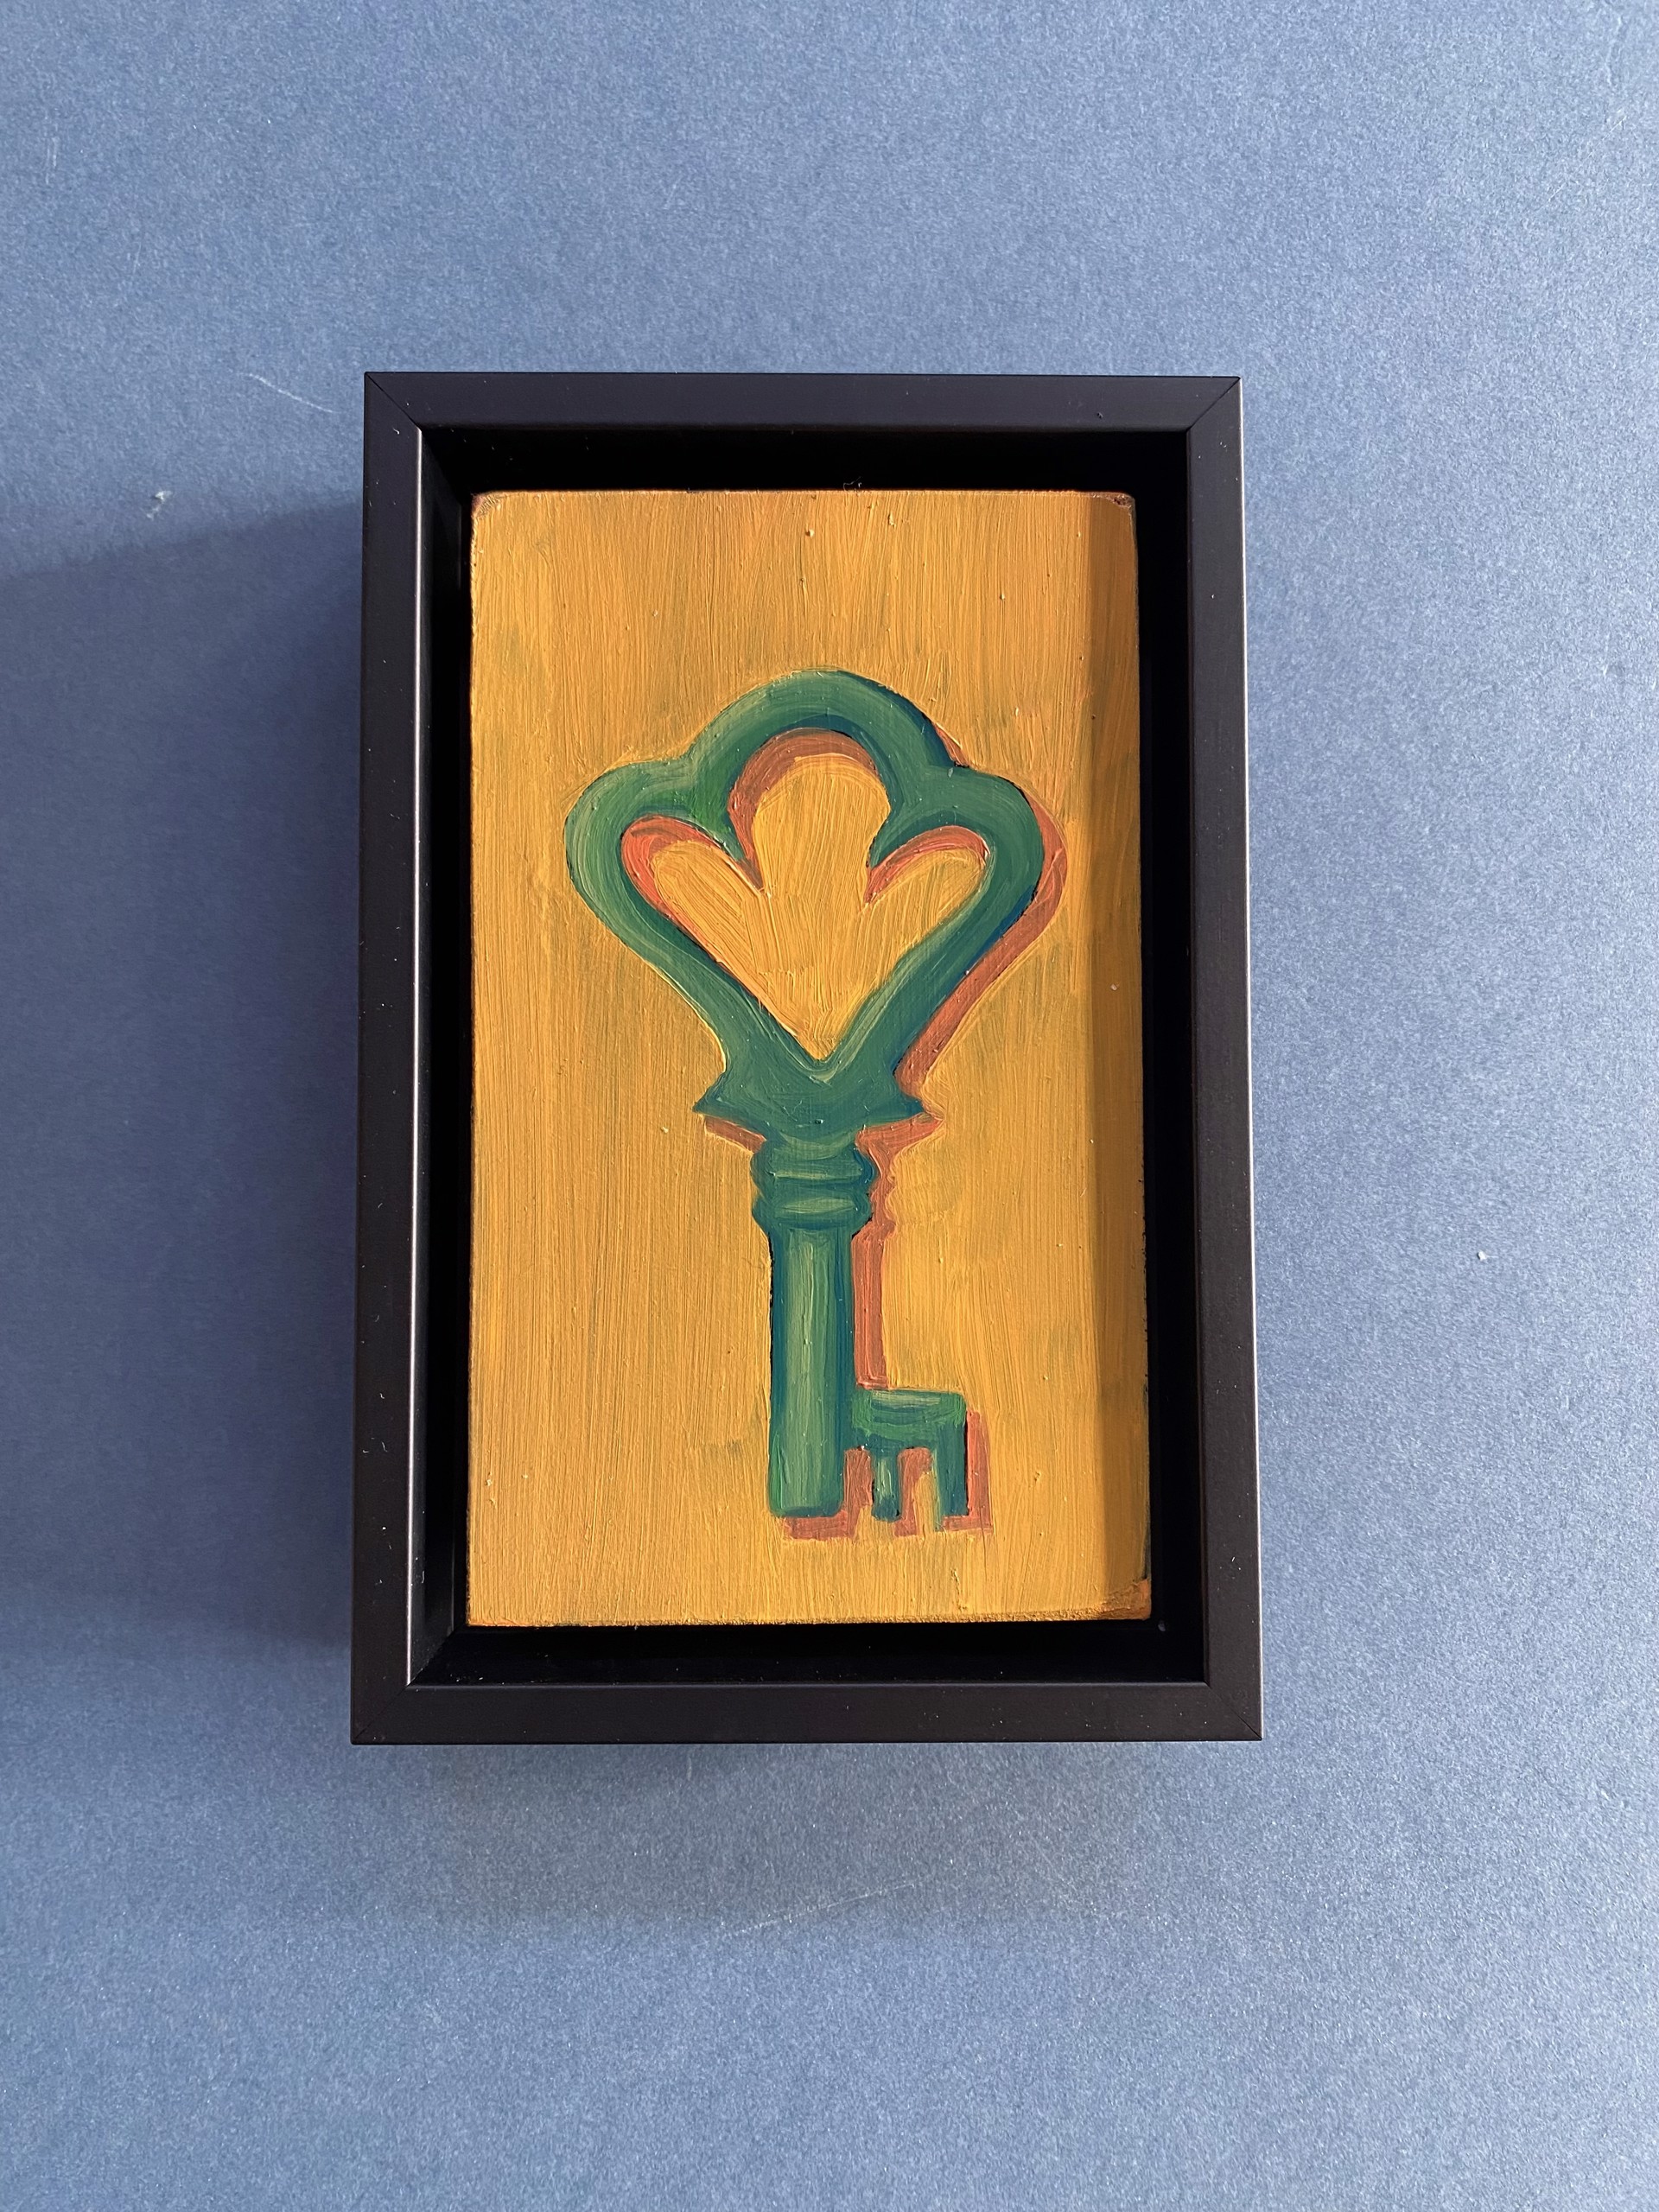 Key No. 58 by Stephen Wells